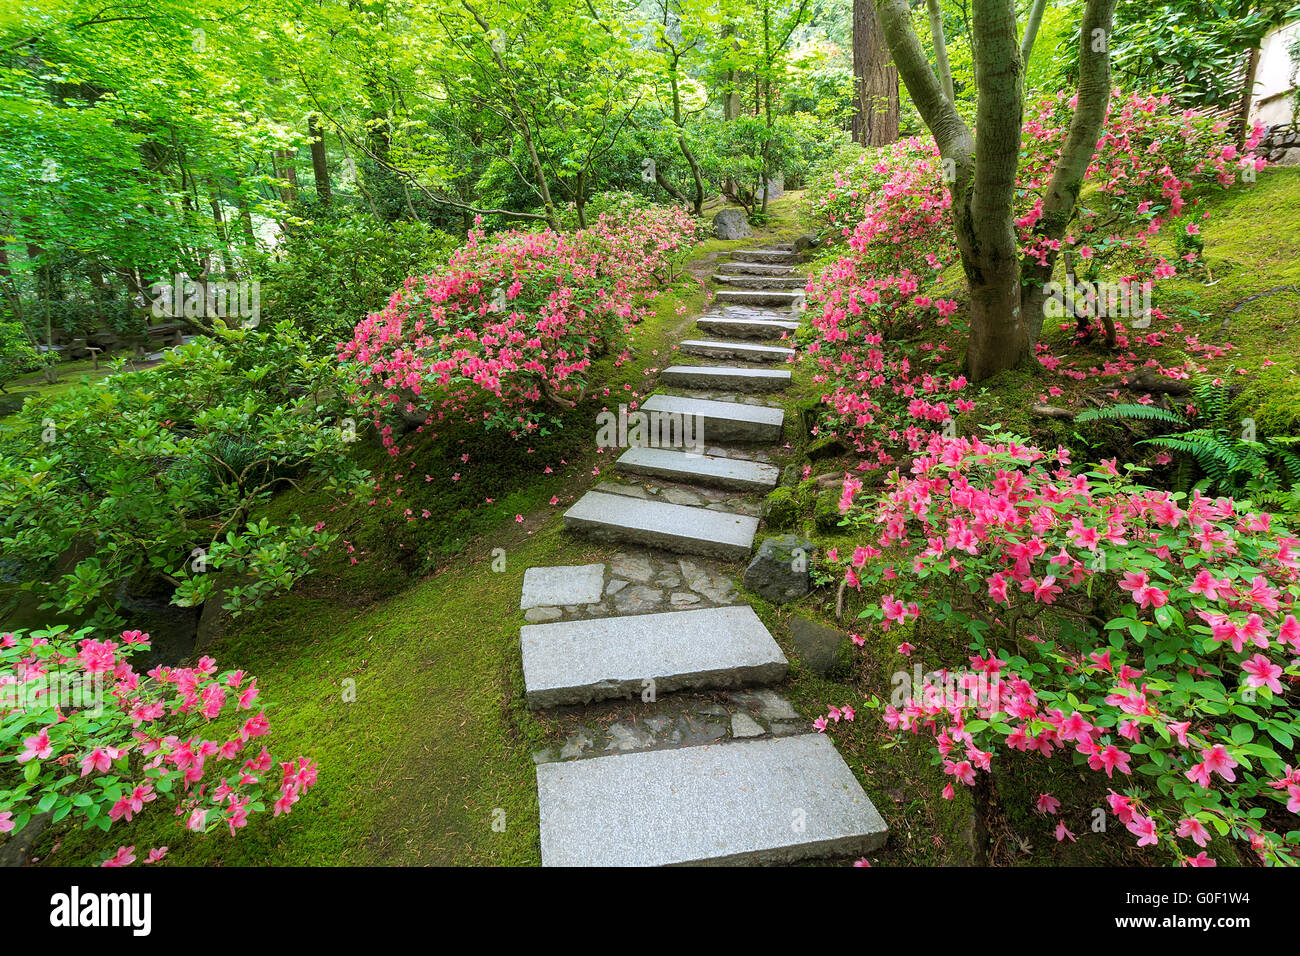 Azaleas in bloom along granite stone stair steps at Japanese Garden in Spring Stock Photo